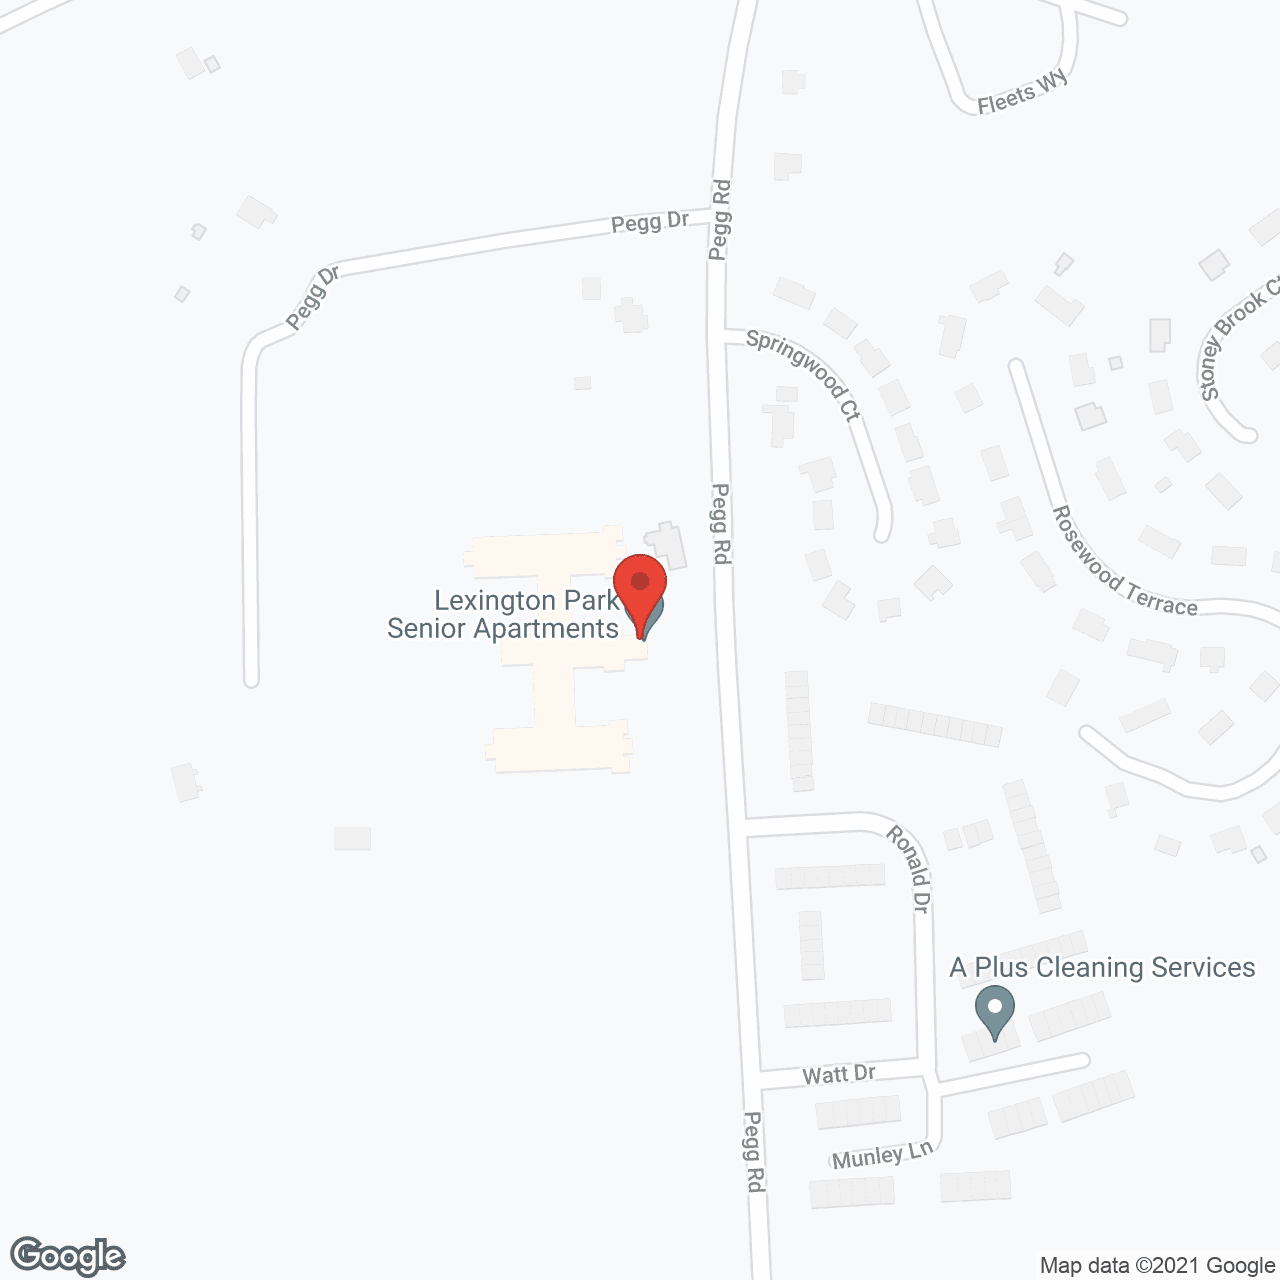 Lexington Park Senior Apartments in google map